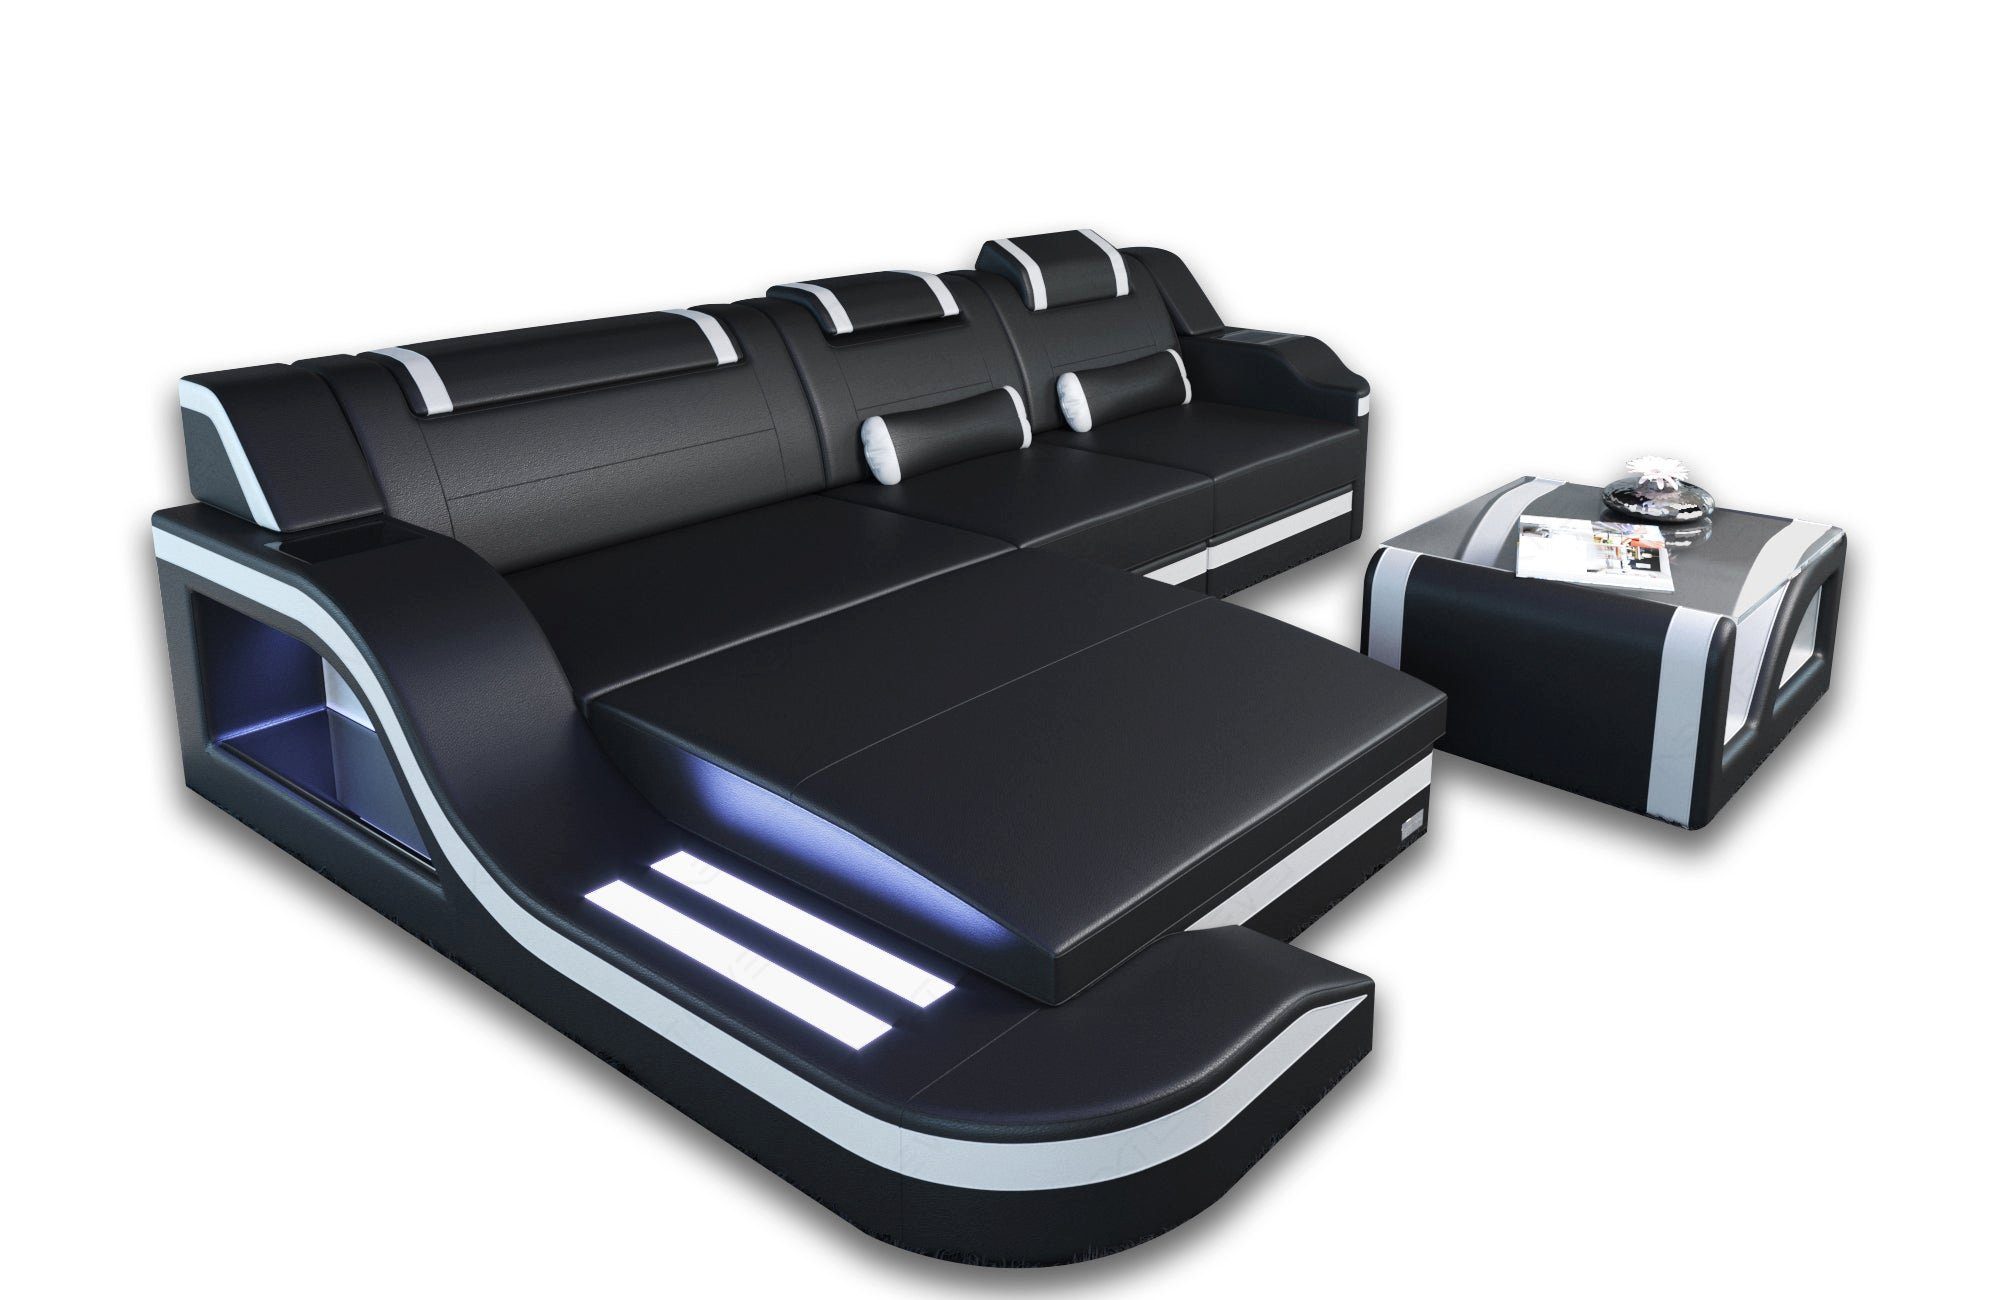 Sofa Dreams Ecksofa mit LED, Polstersofa Designersofa Hellgrau-Schwarz Couch Bettfunktion, ausziehbare L Stoffsofa Stoff Palermo C76 Form